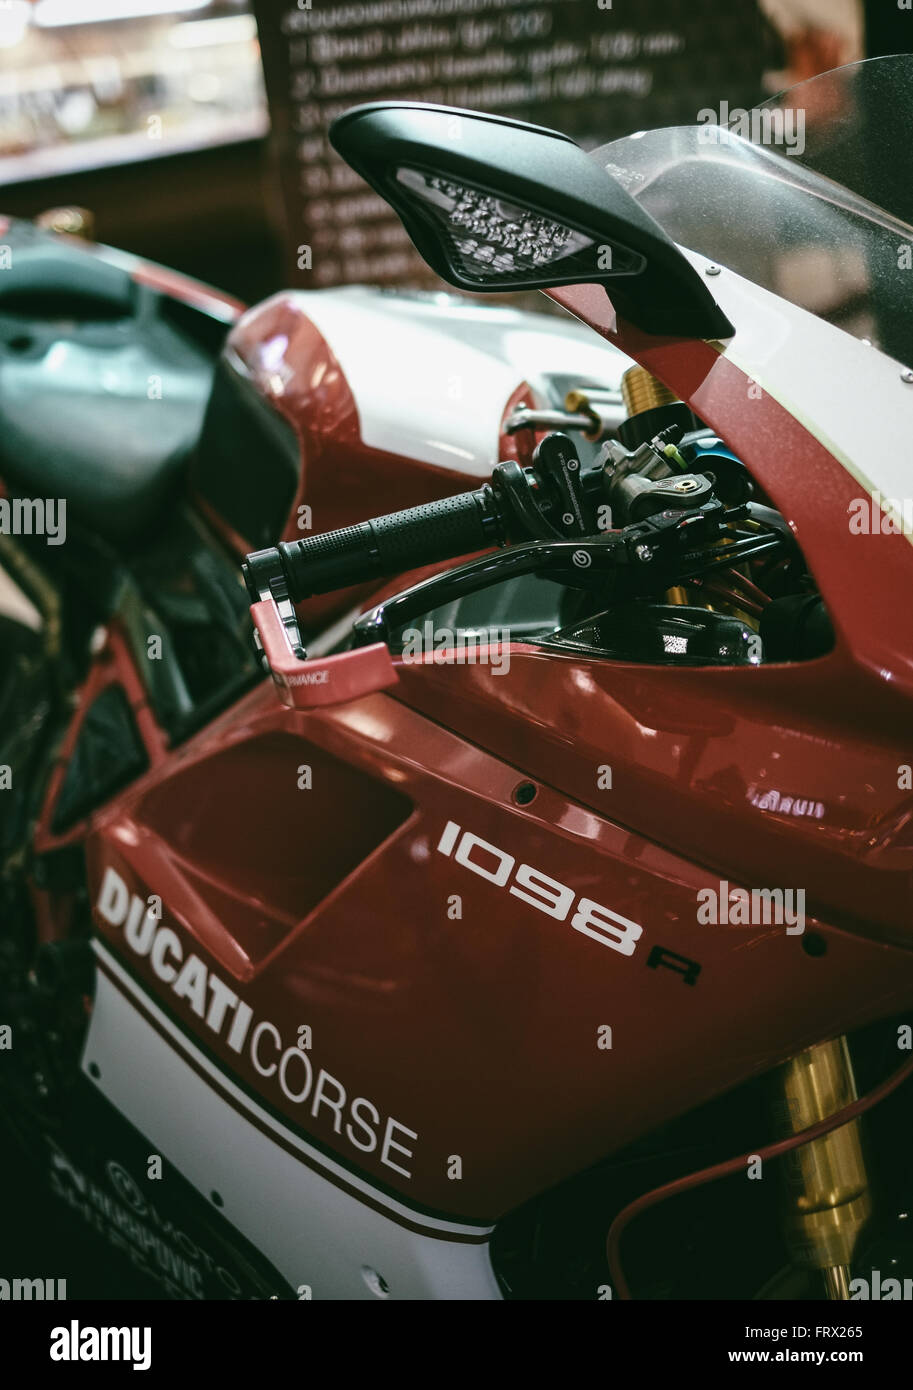 Motorbike show Stock Photo